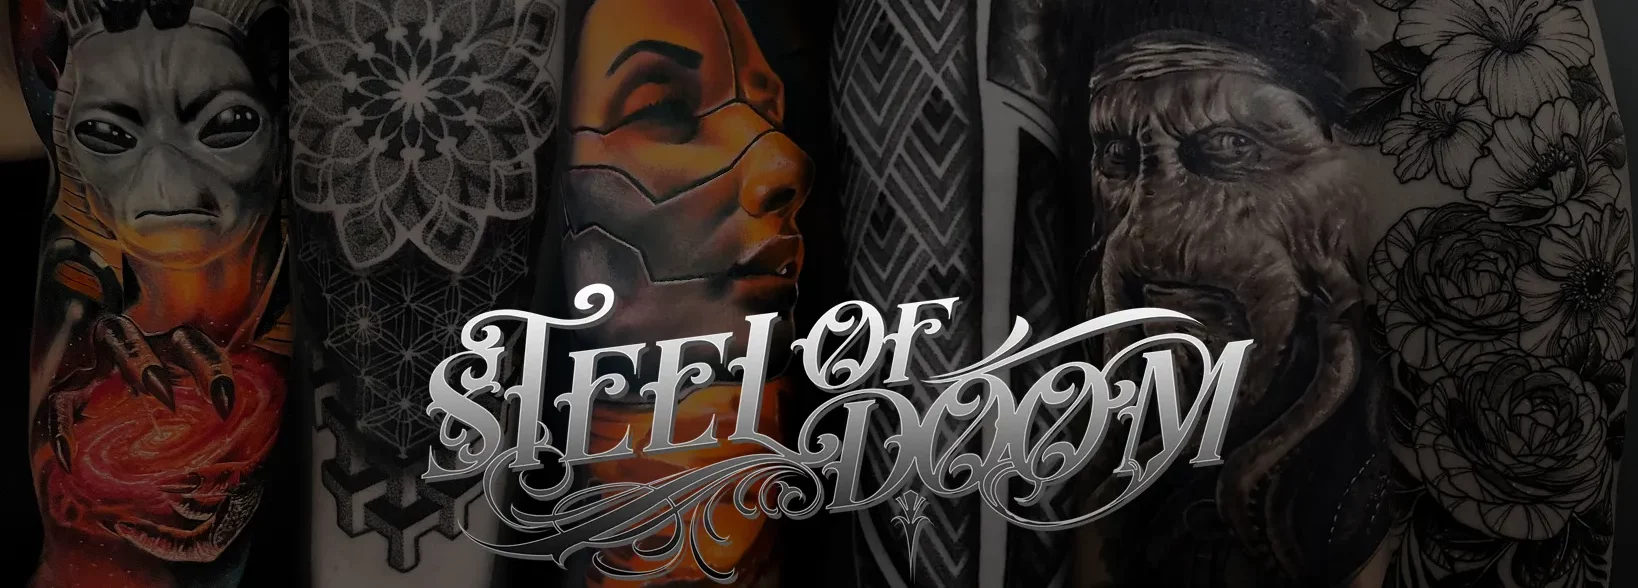 Steel Of Doom Tattoo Barcelona & Piercing